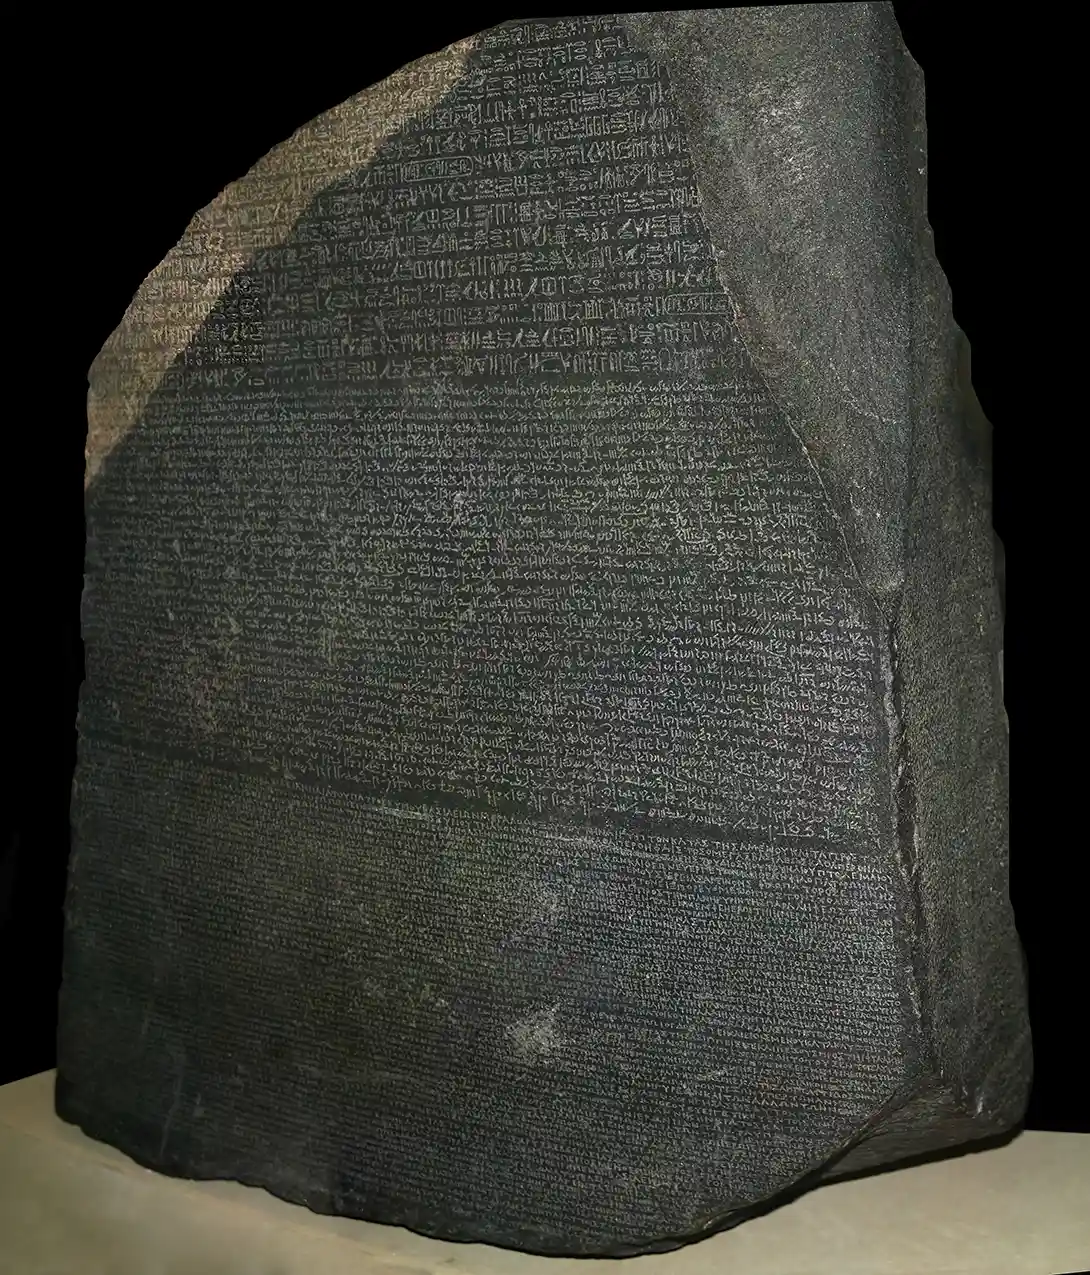 Egipto exige al Reino Unido que le devuelva la Piedra de Rosetta